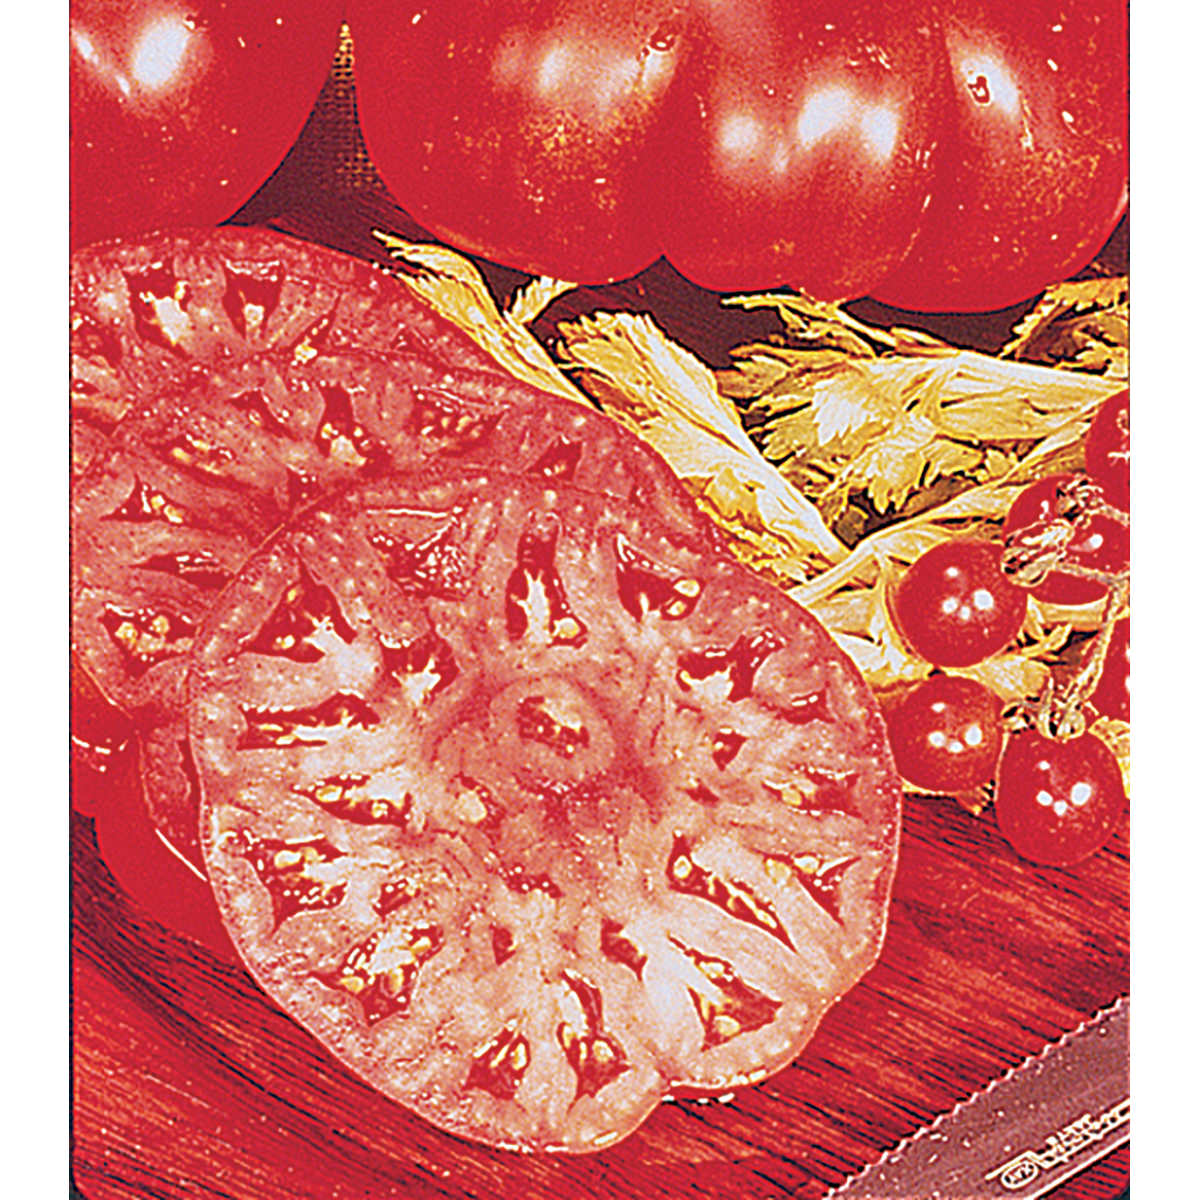 Beefmaster F1 Hybrid Tomato Seeds